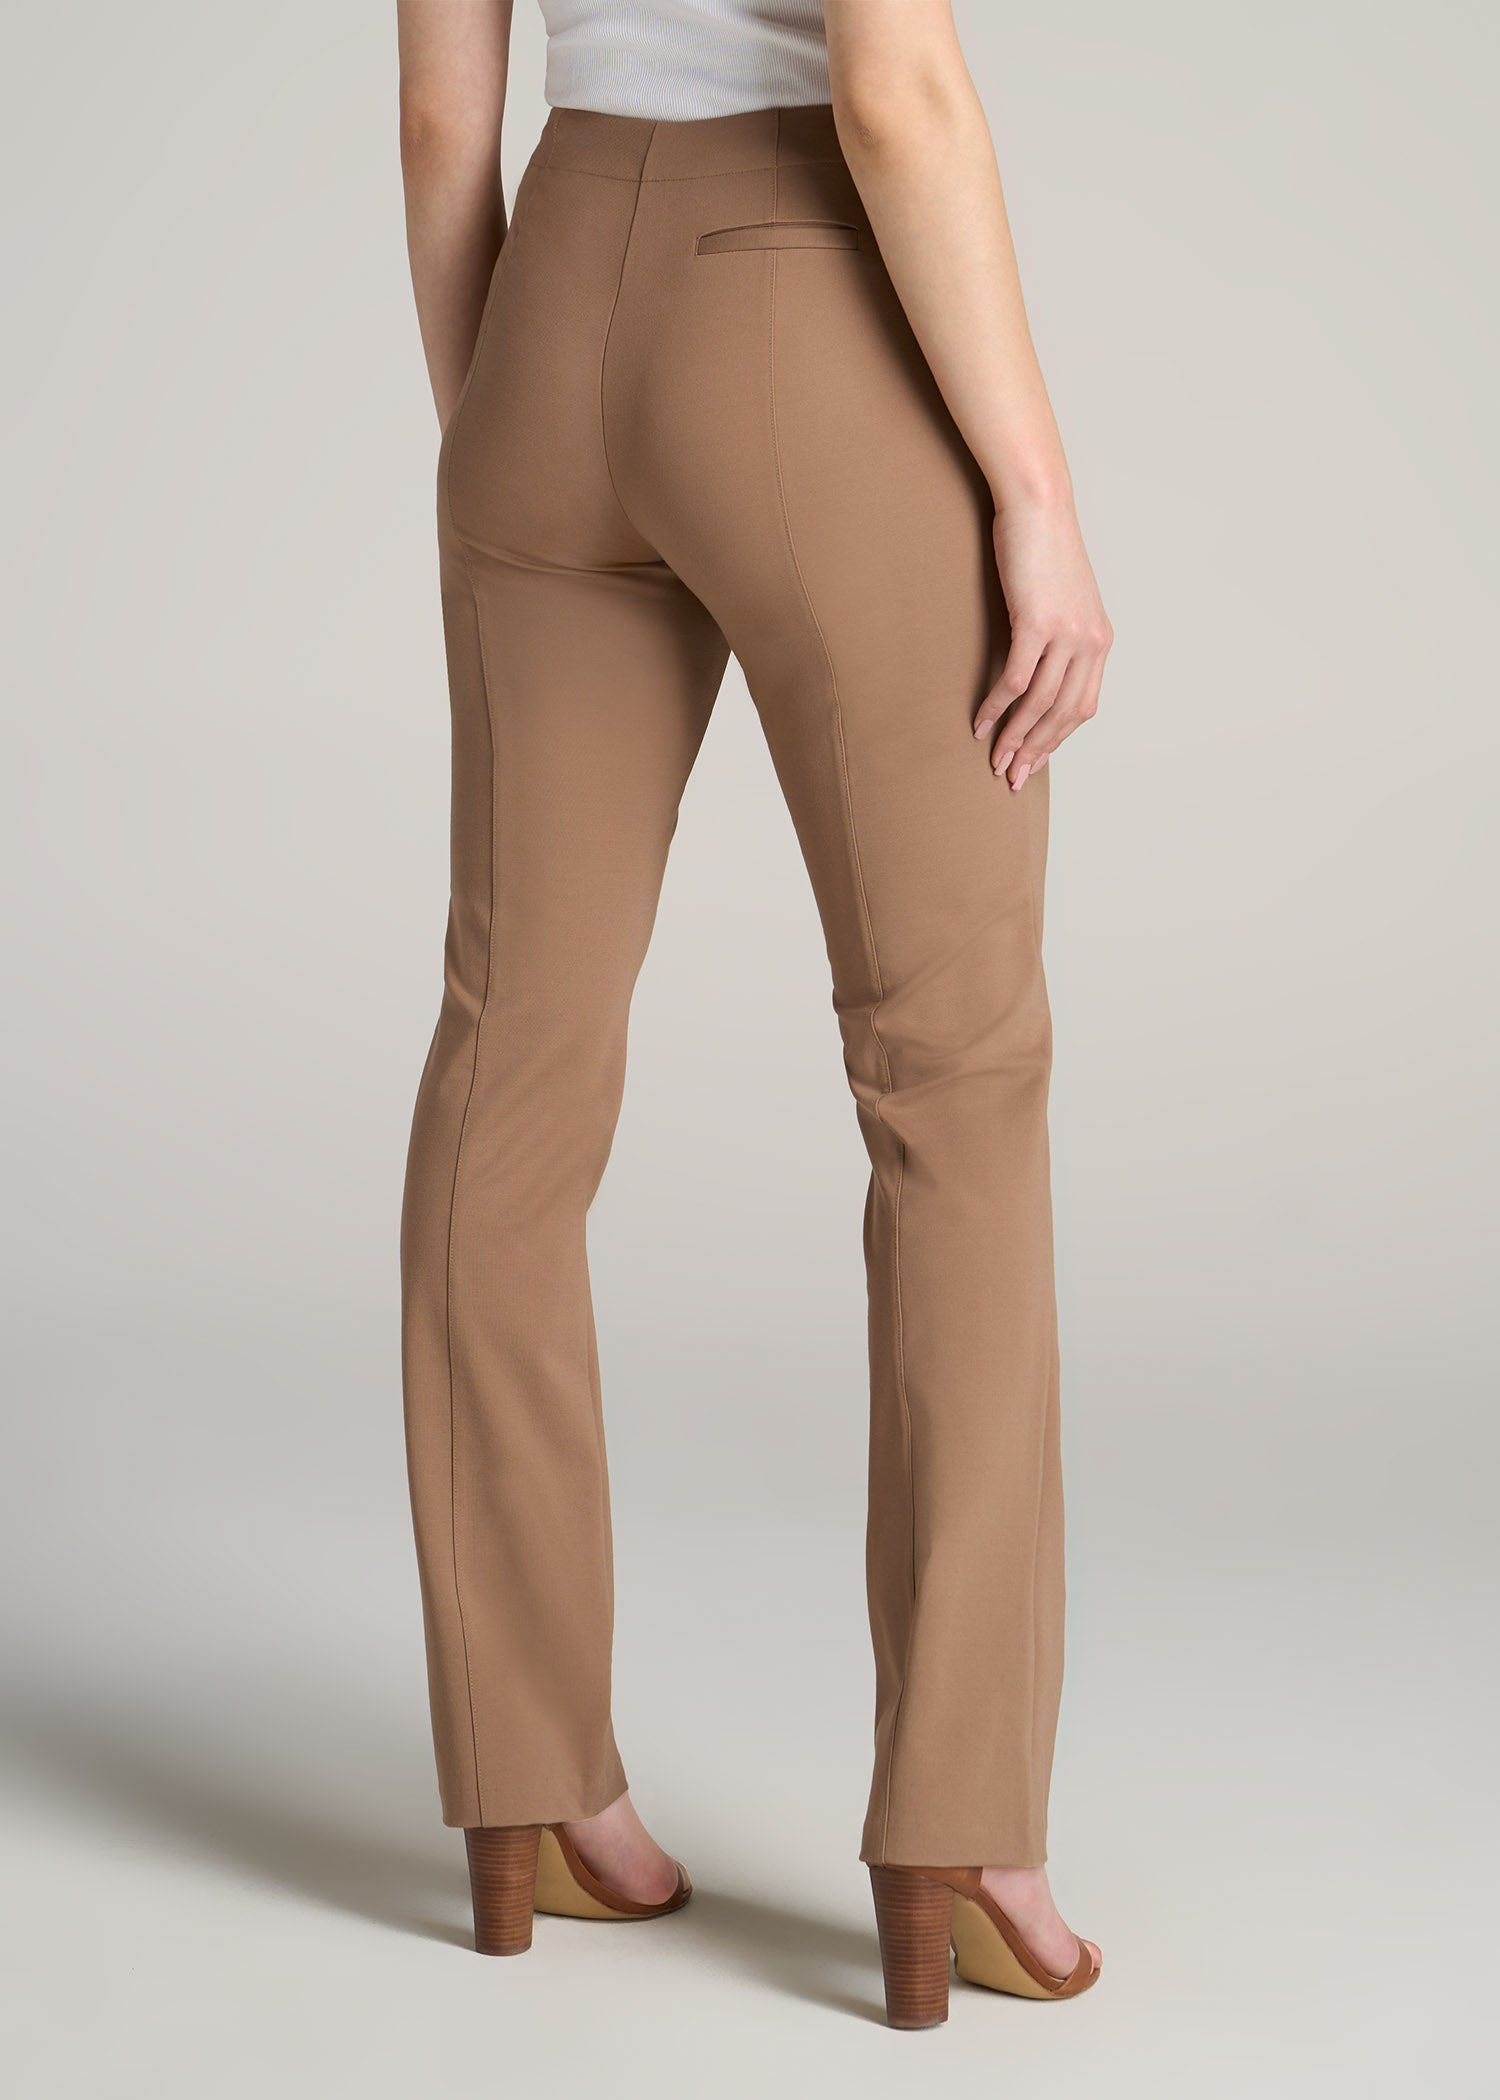 Stafford NWT Dress Pants 46x32 Black Pinstripe 100% Wool Executive Flat  Front | eBay